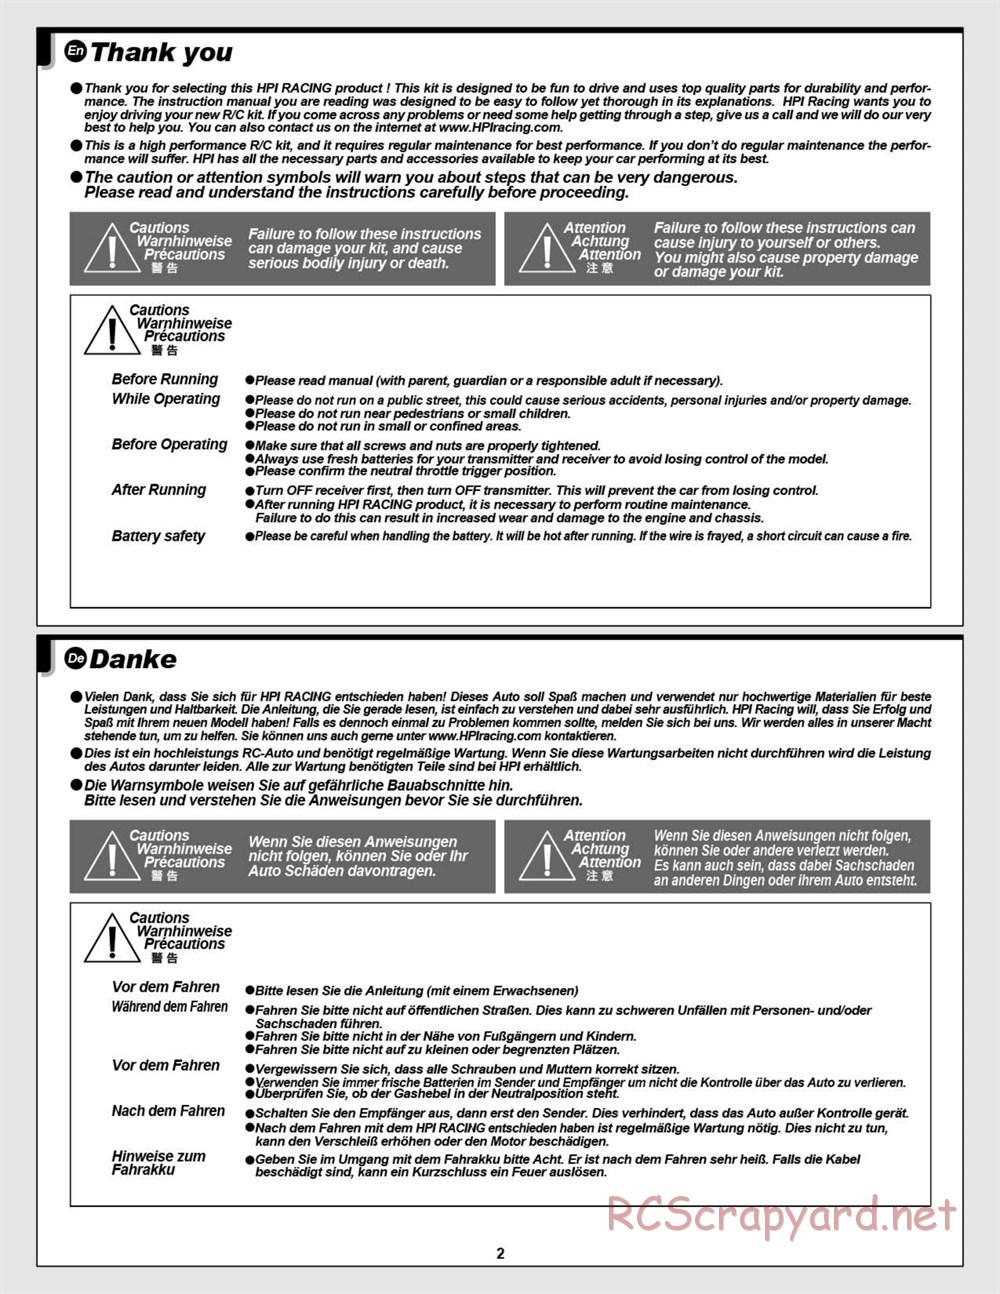 HPI - E10 - Manual - Page 2